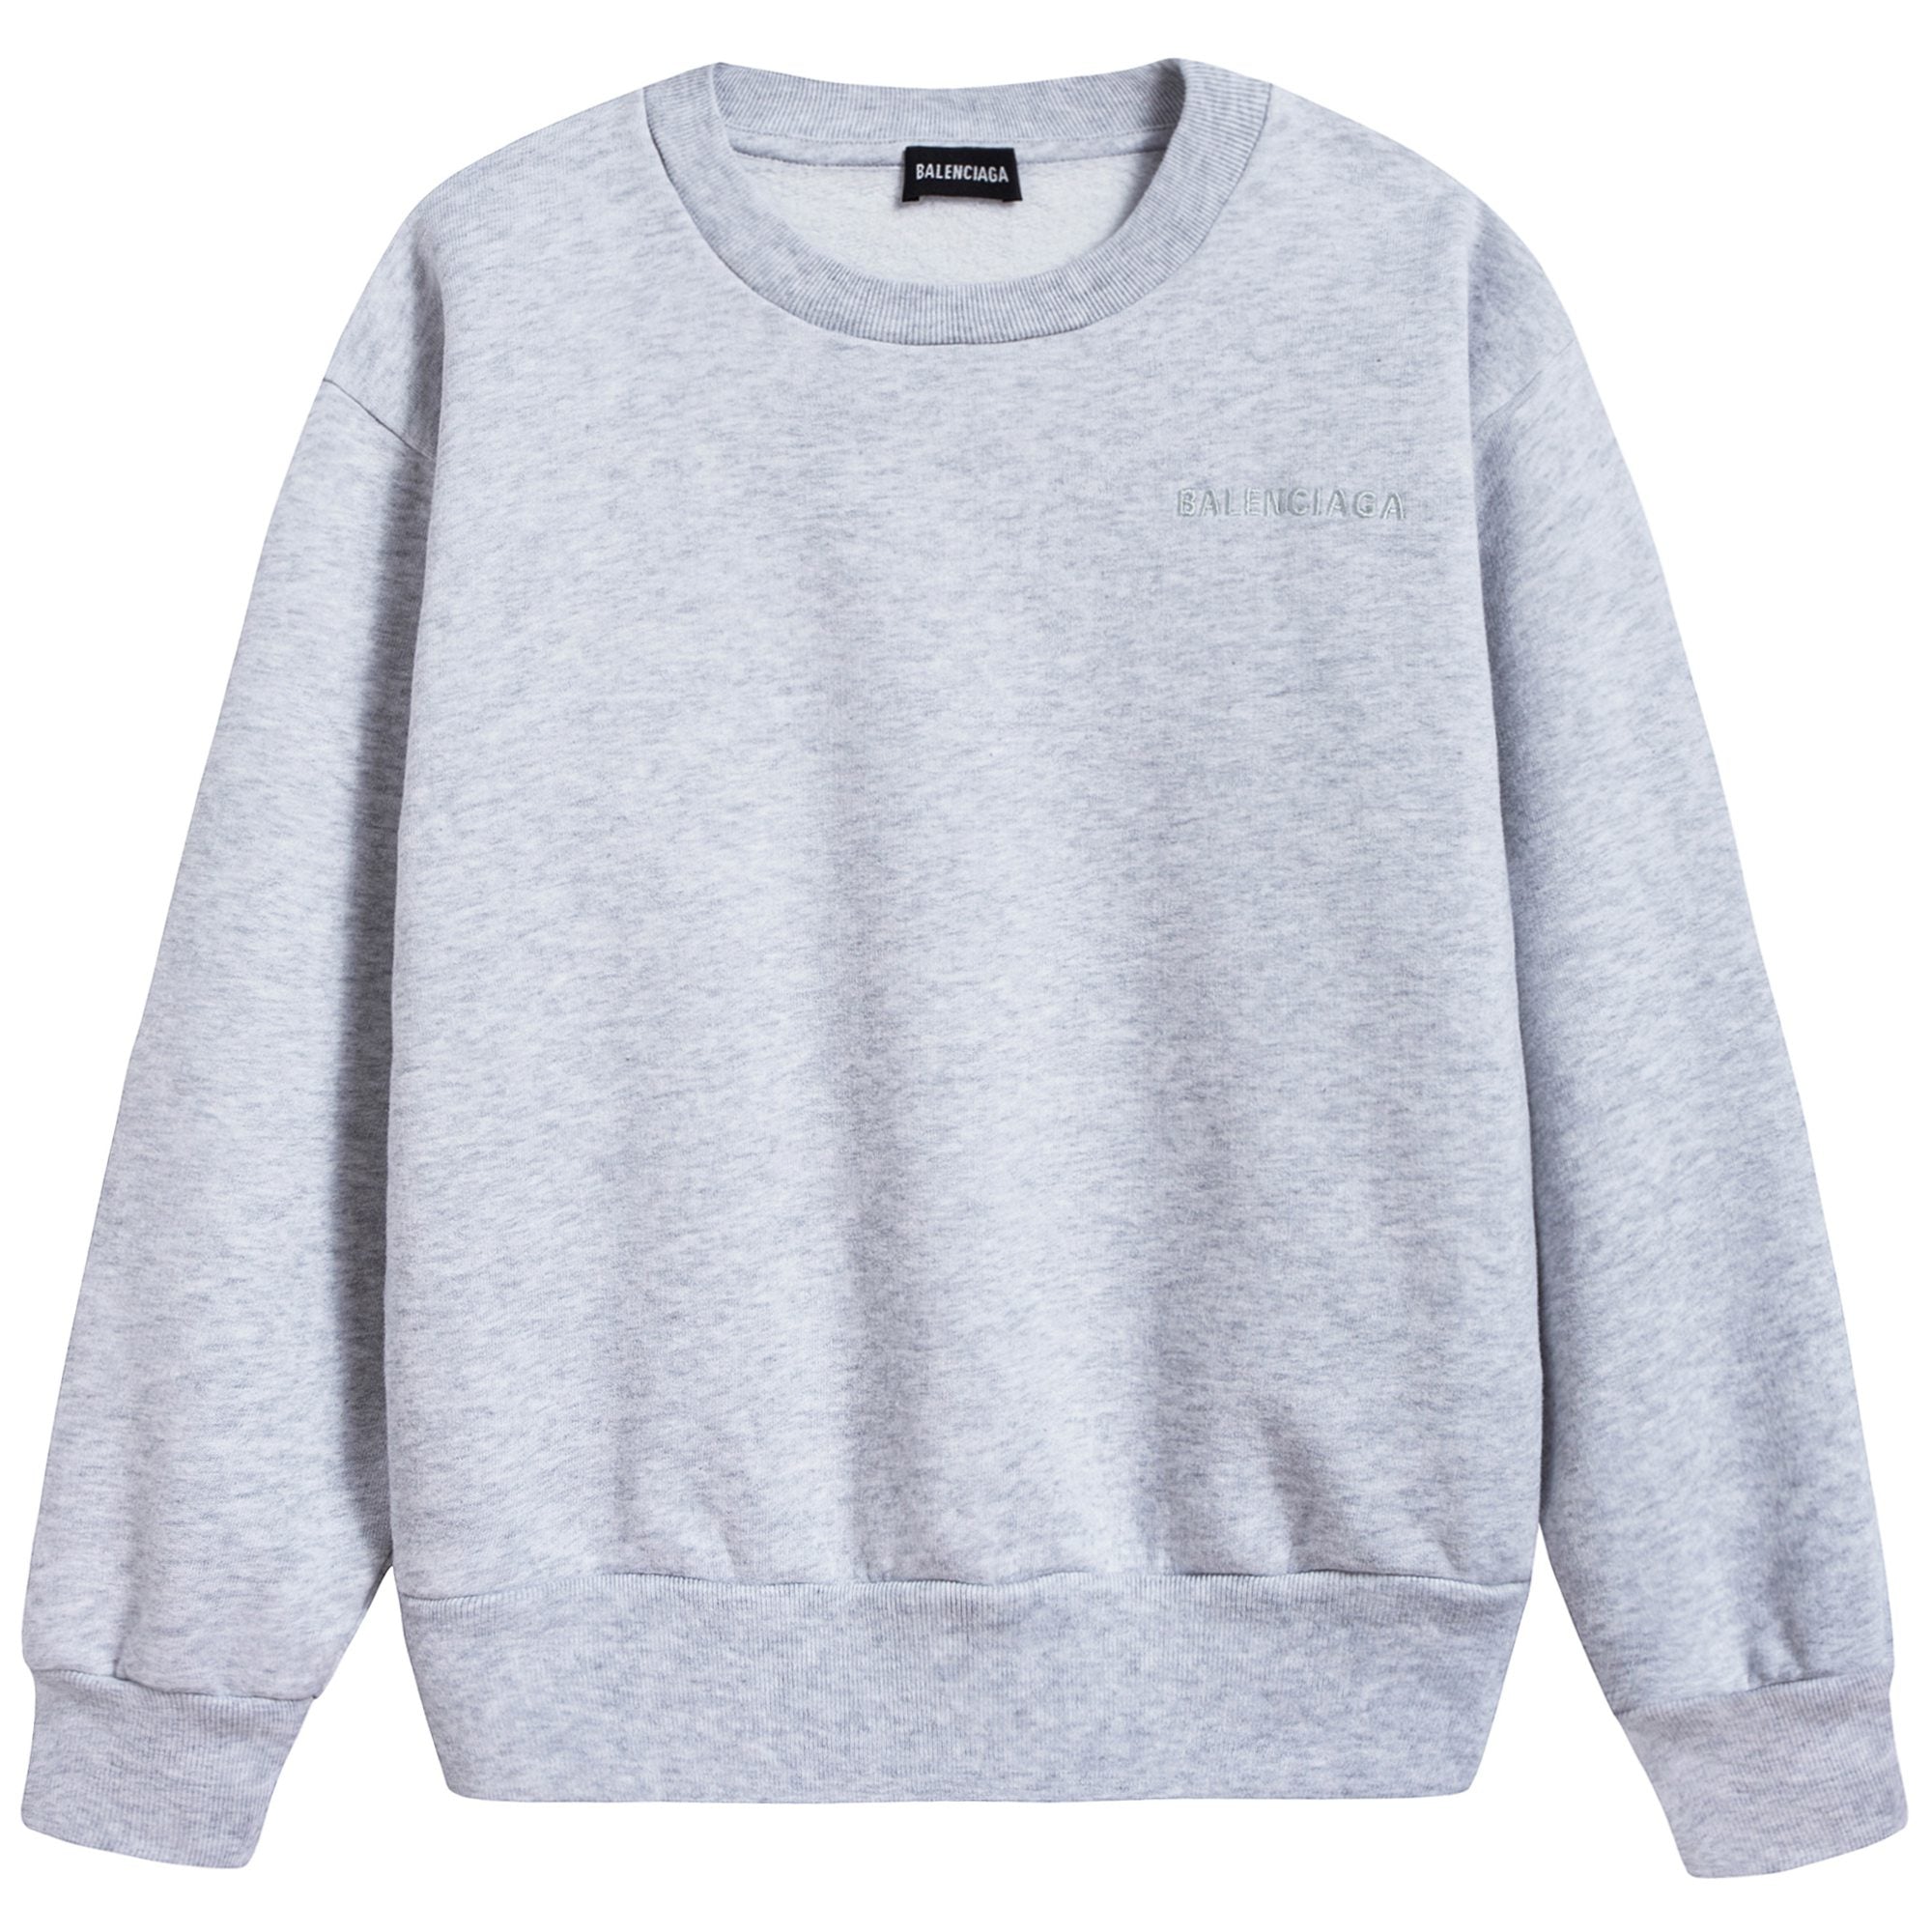 Boys & Girls Grey Cotton Sweatshirt